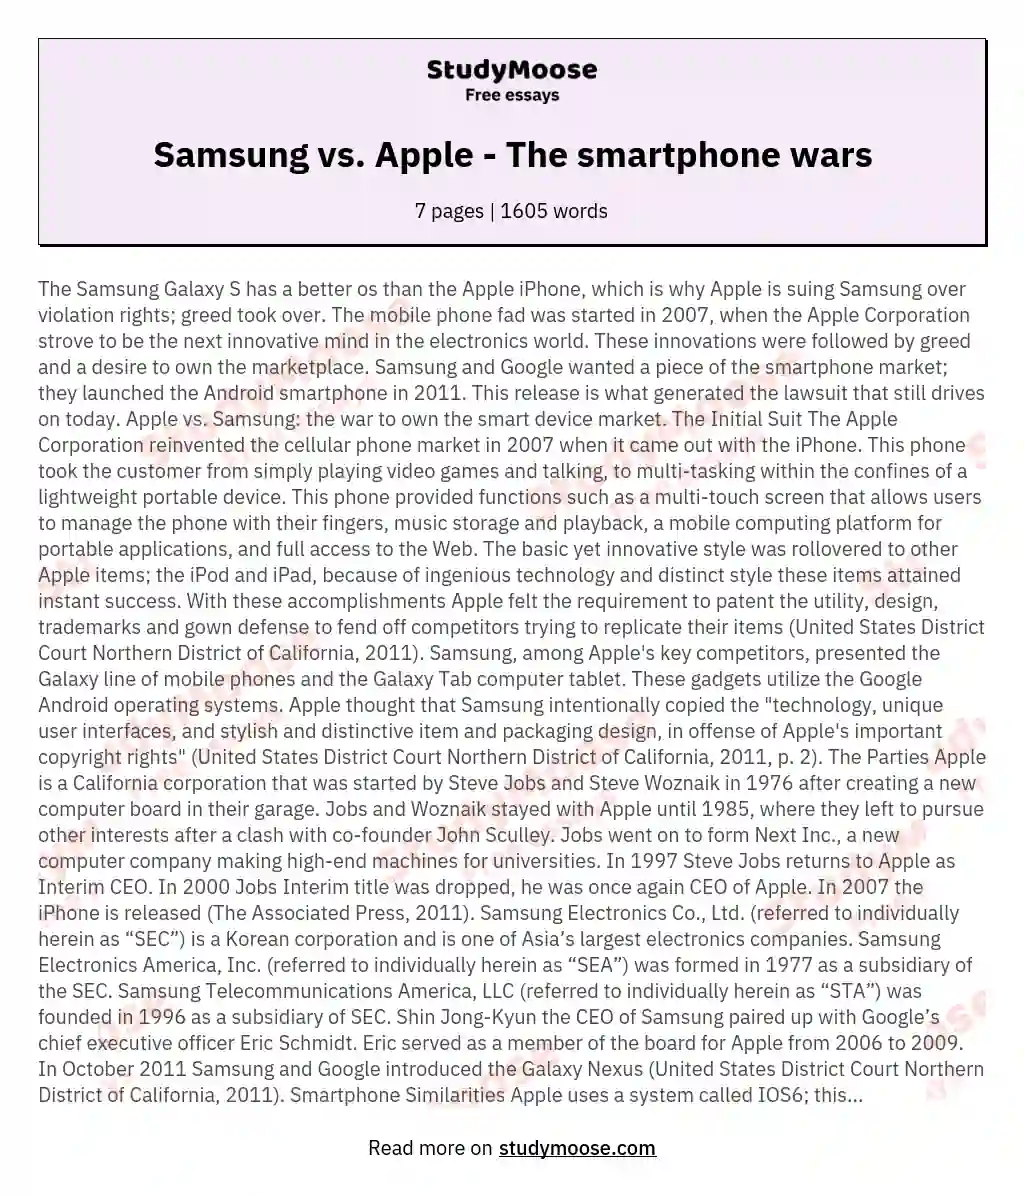 Samsung vs. Apple - The smartphone wars essay